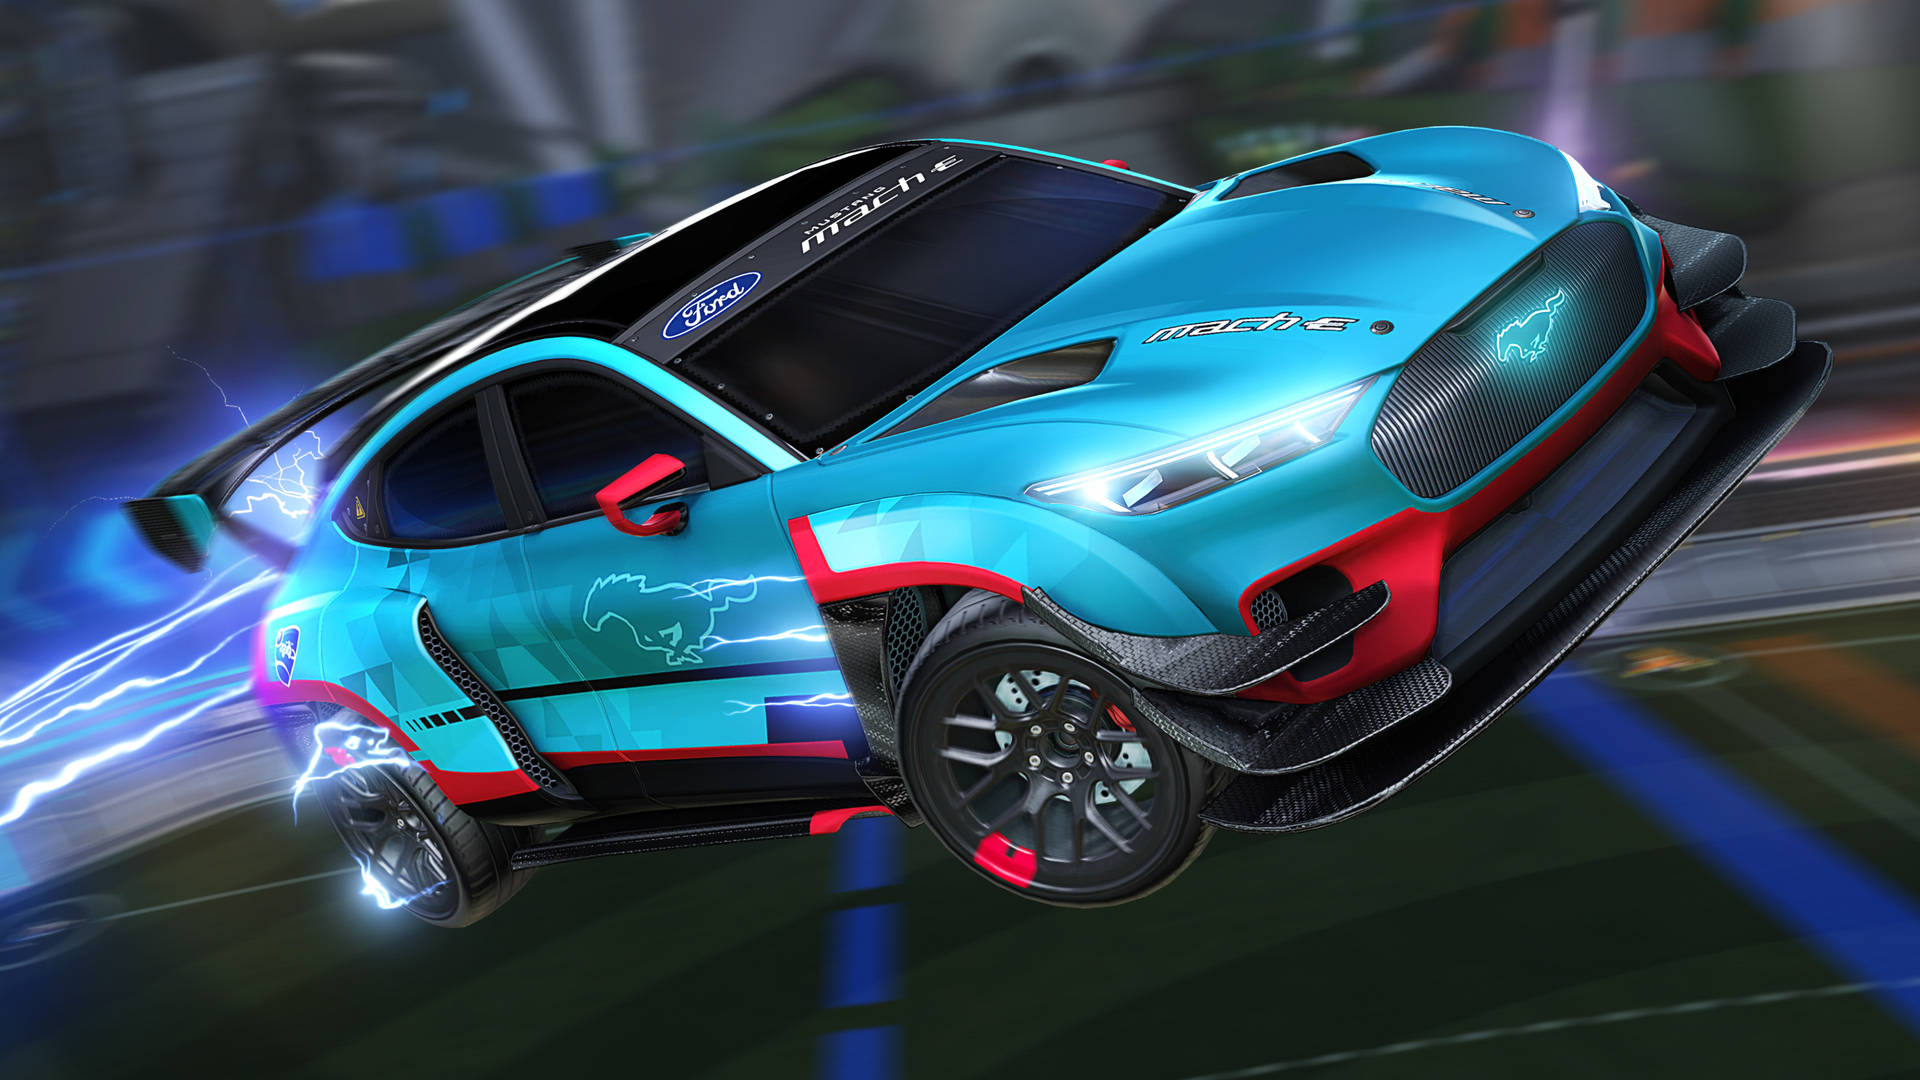 Blauermustang Rocket League Auto In 2k Wallpaper